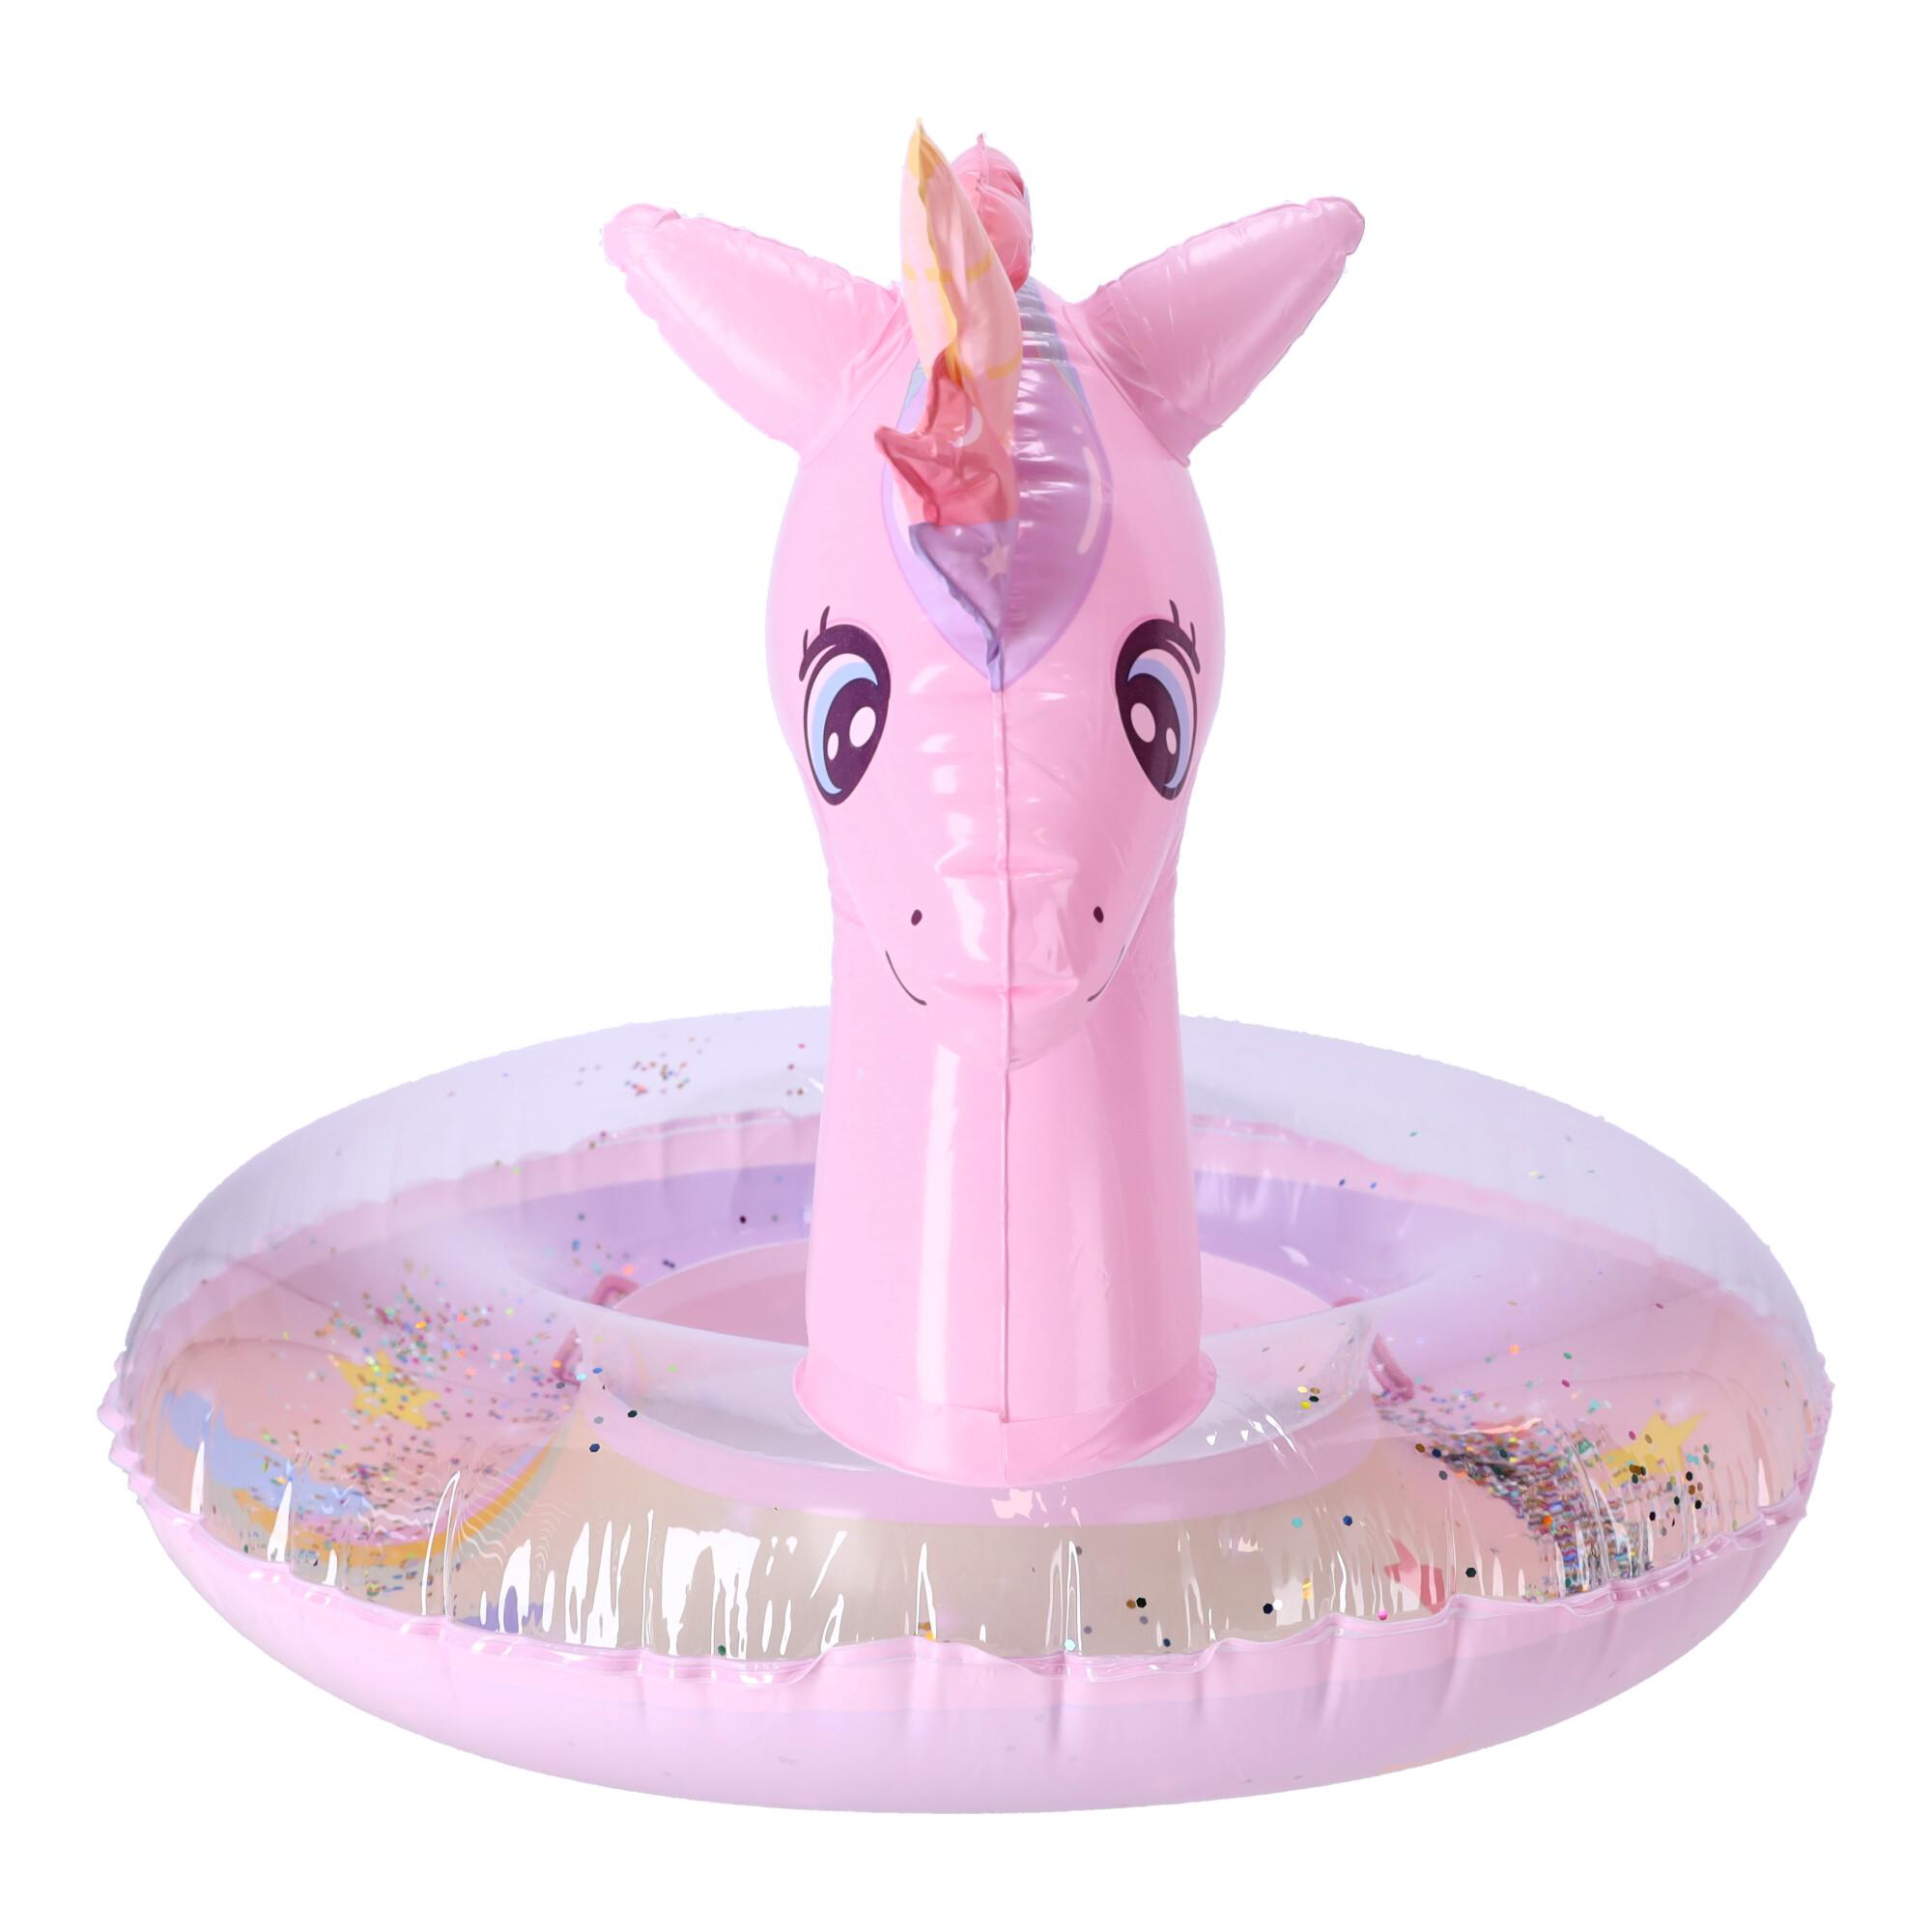 Children's inflatable swimming wheel 70 cm - unicorn, pink